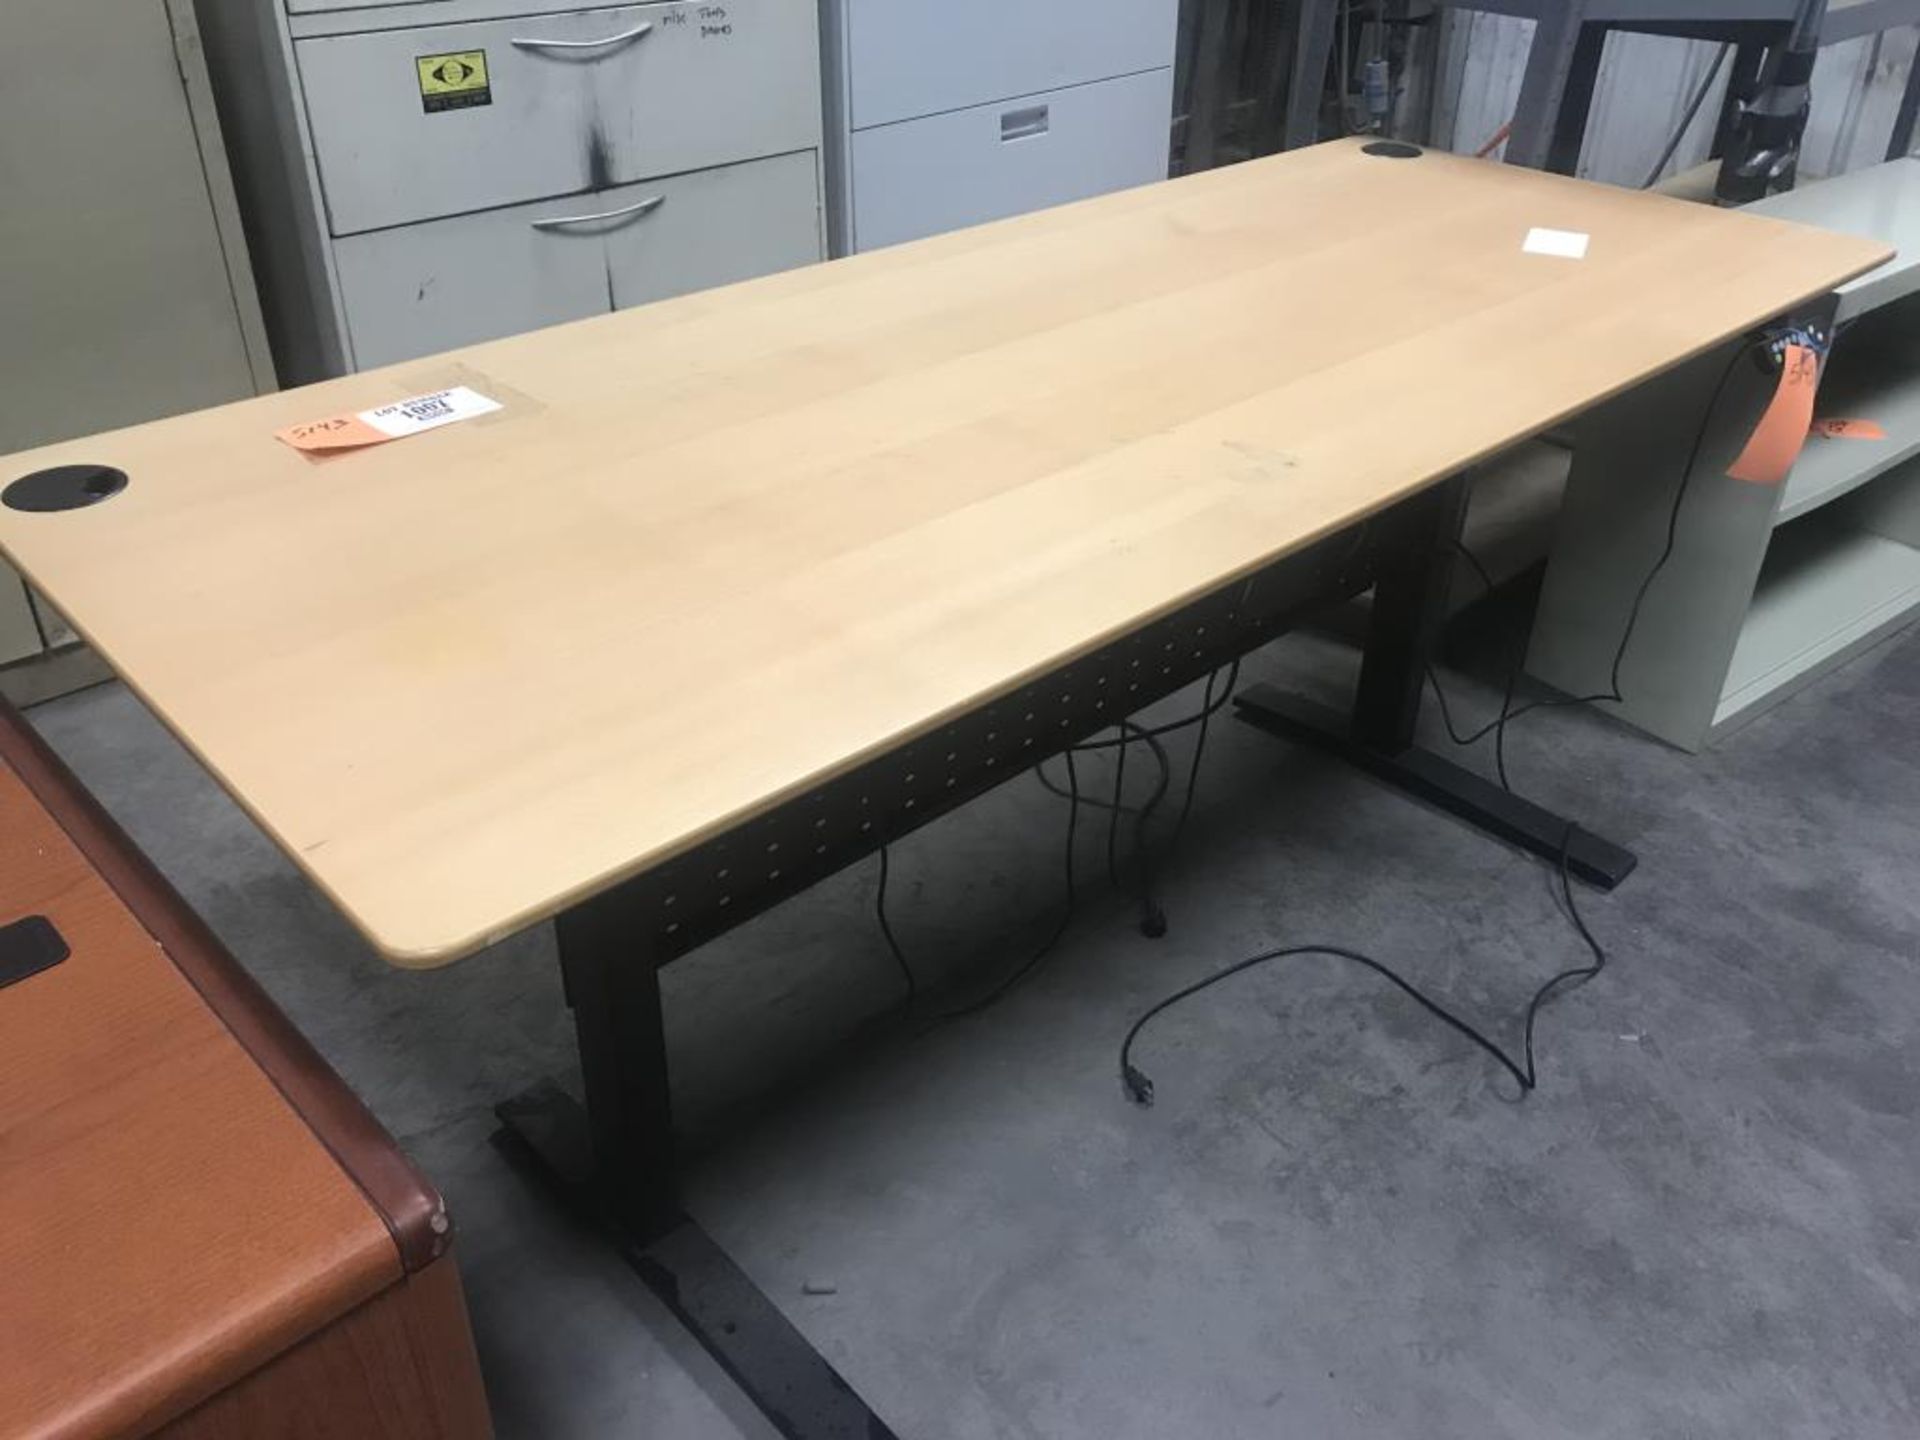 Adjustable height table